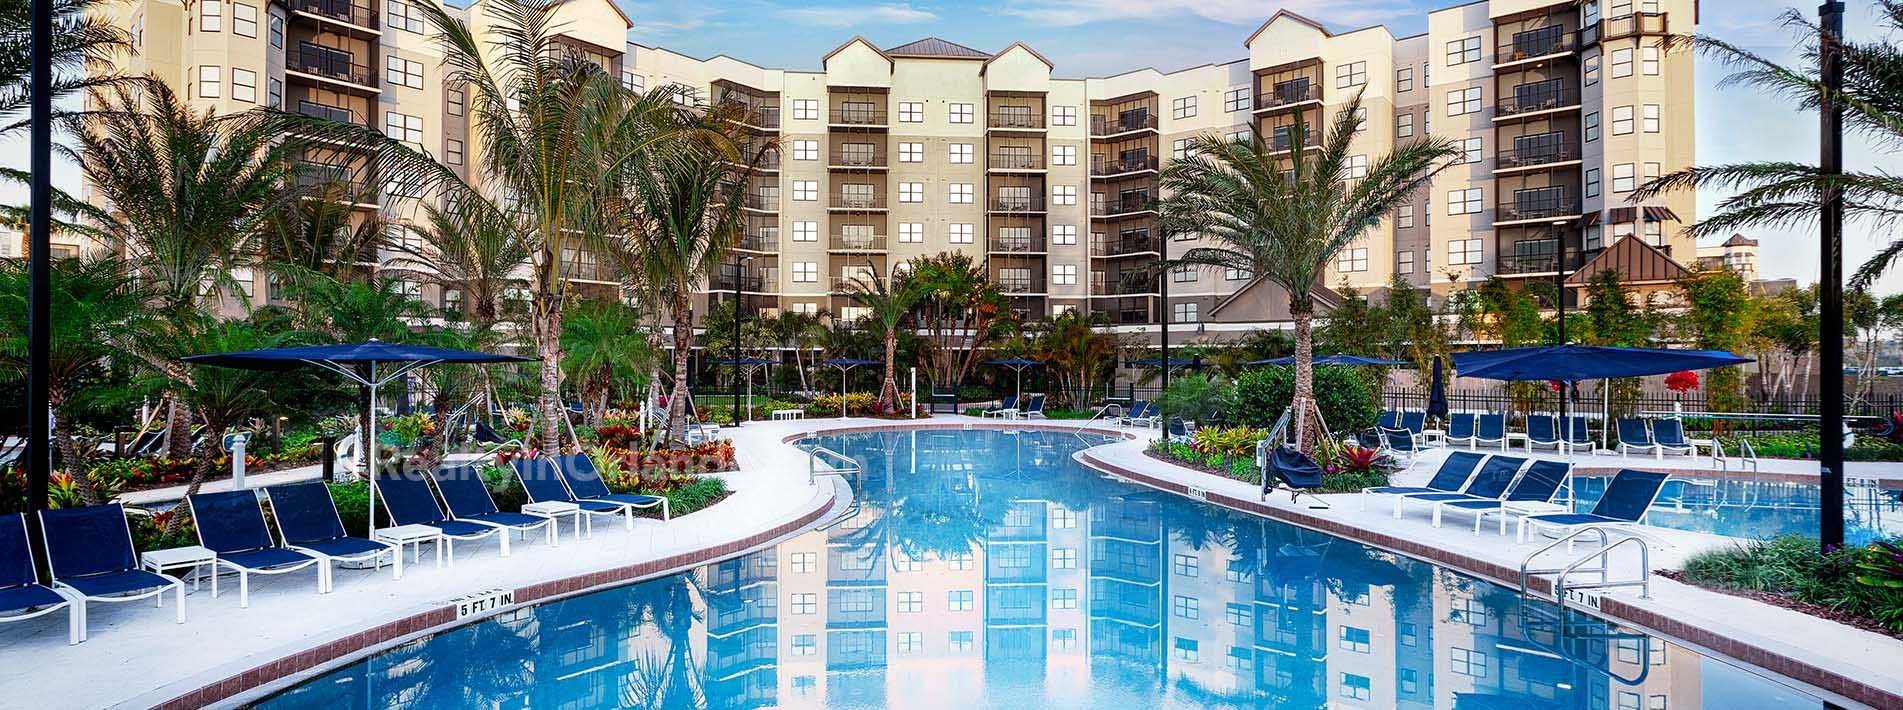 The Grove Resort Orlando Pool